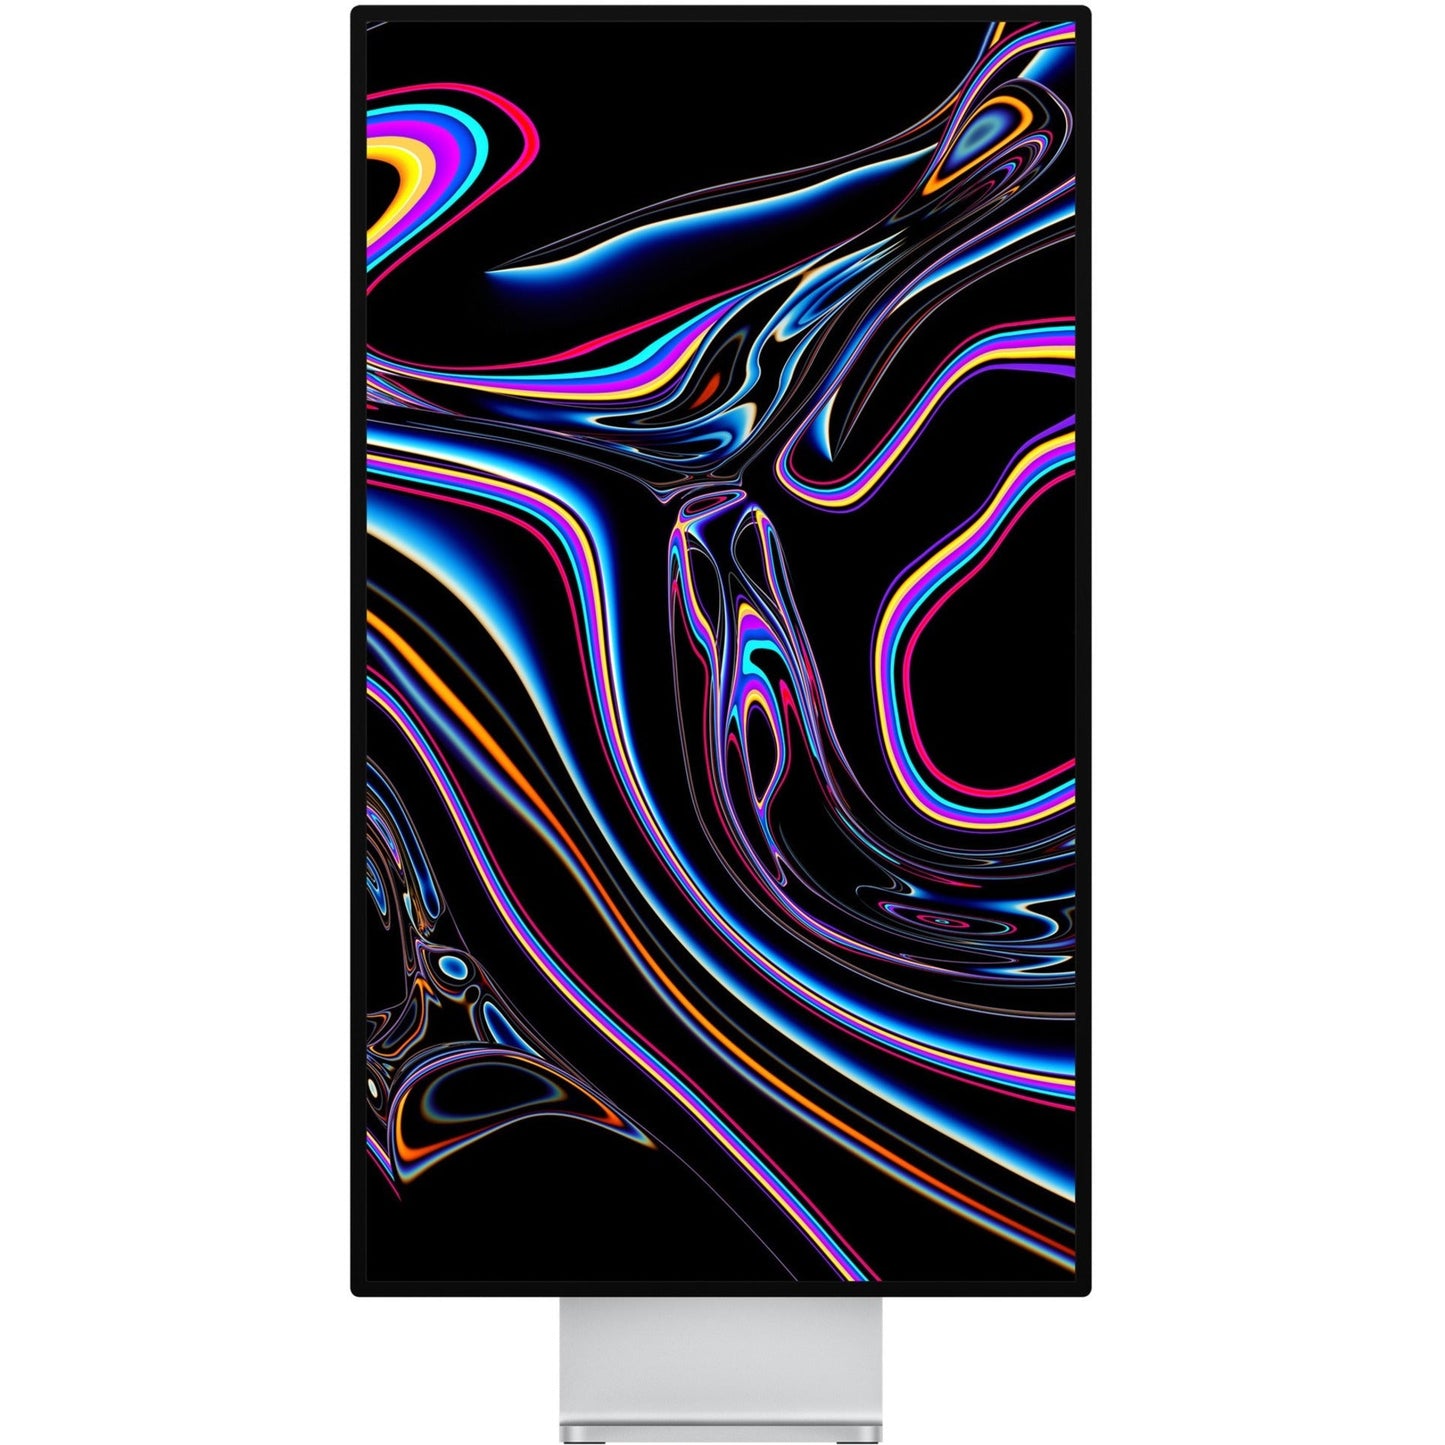 Apple Pro Display XDR 32" 6K LCD Monitor - 16:9 - Glossy